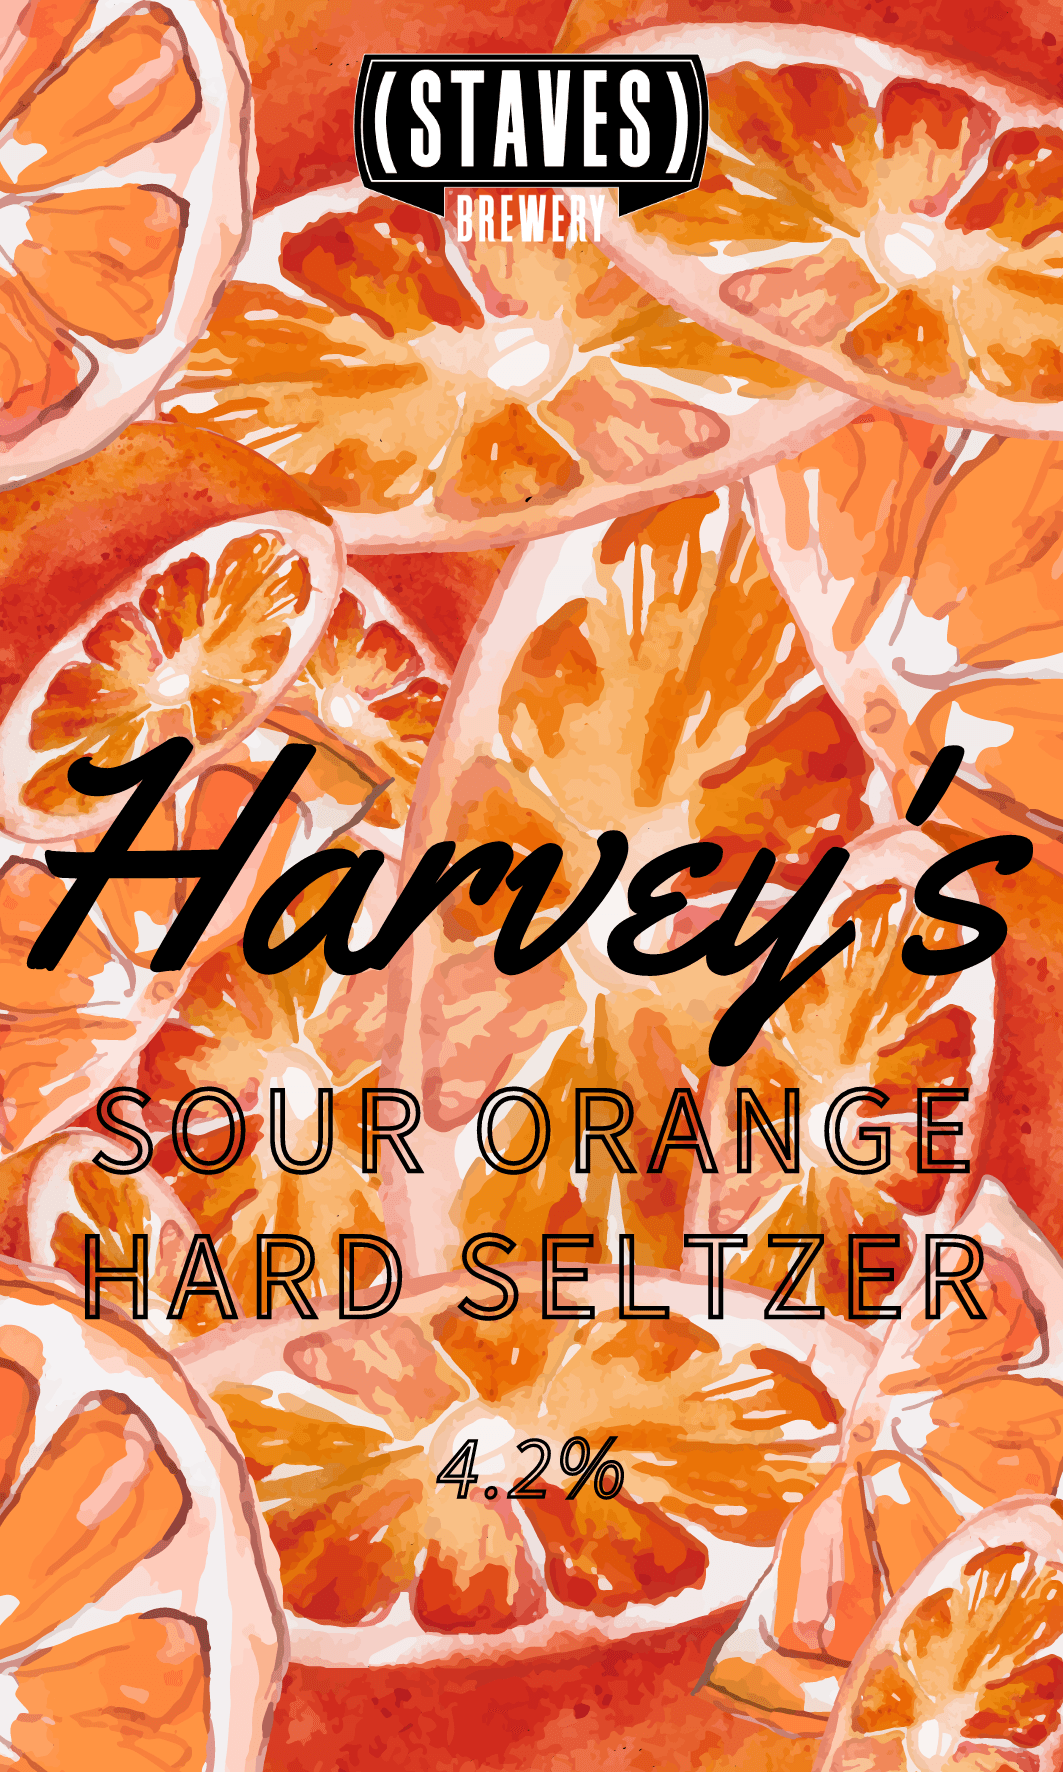 'Harvey's Sour Orange' Hard Seltzer